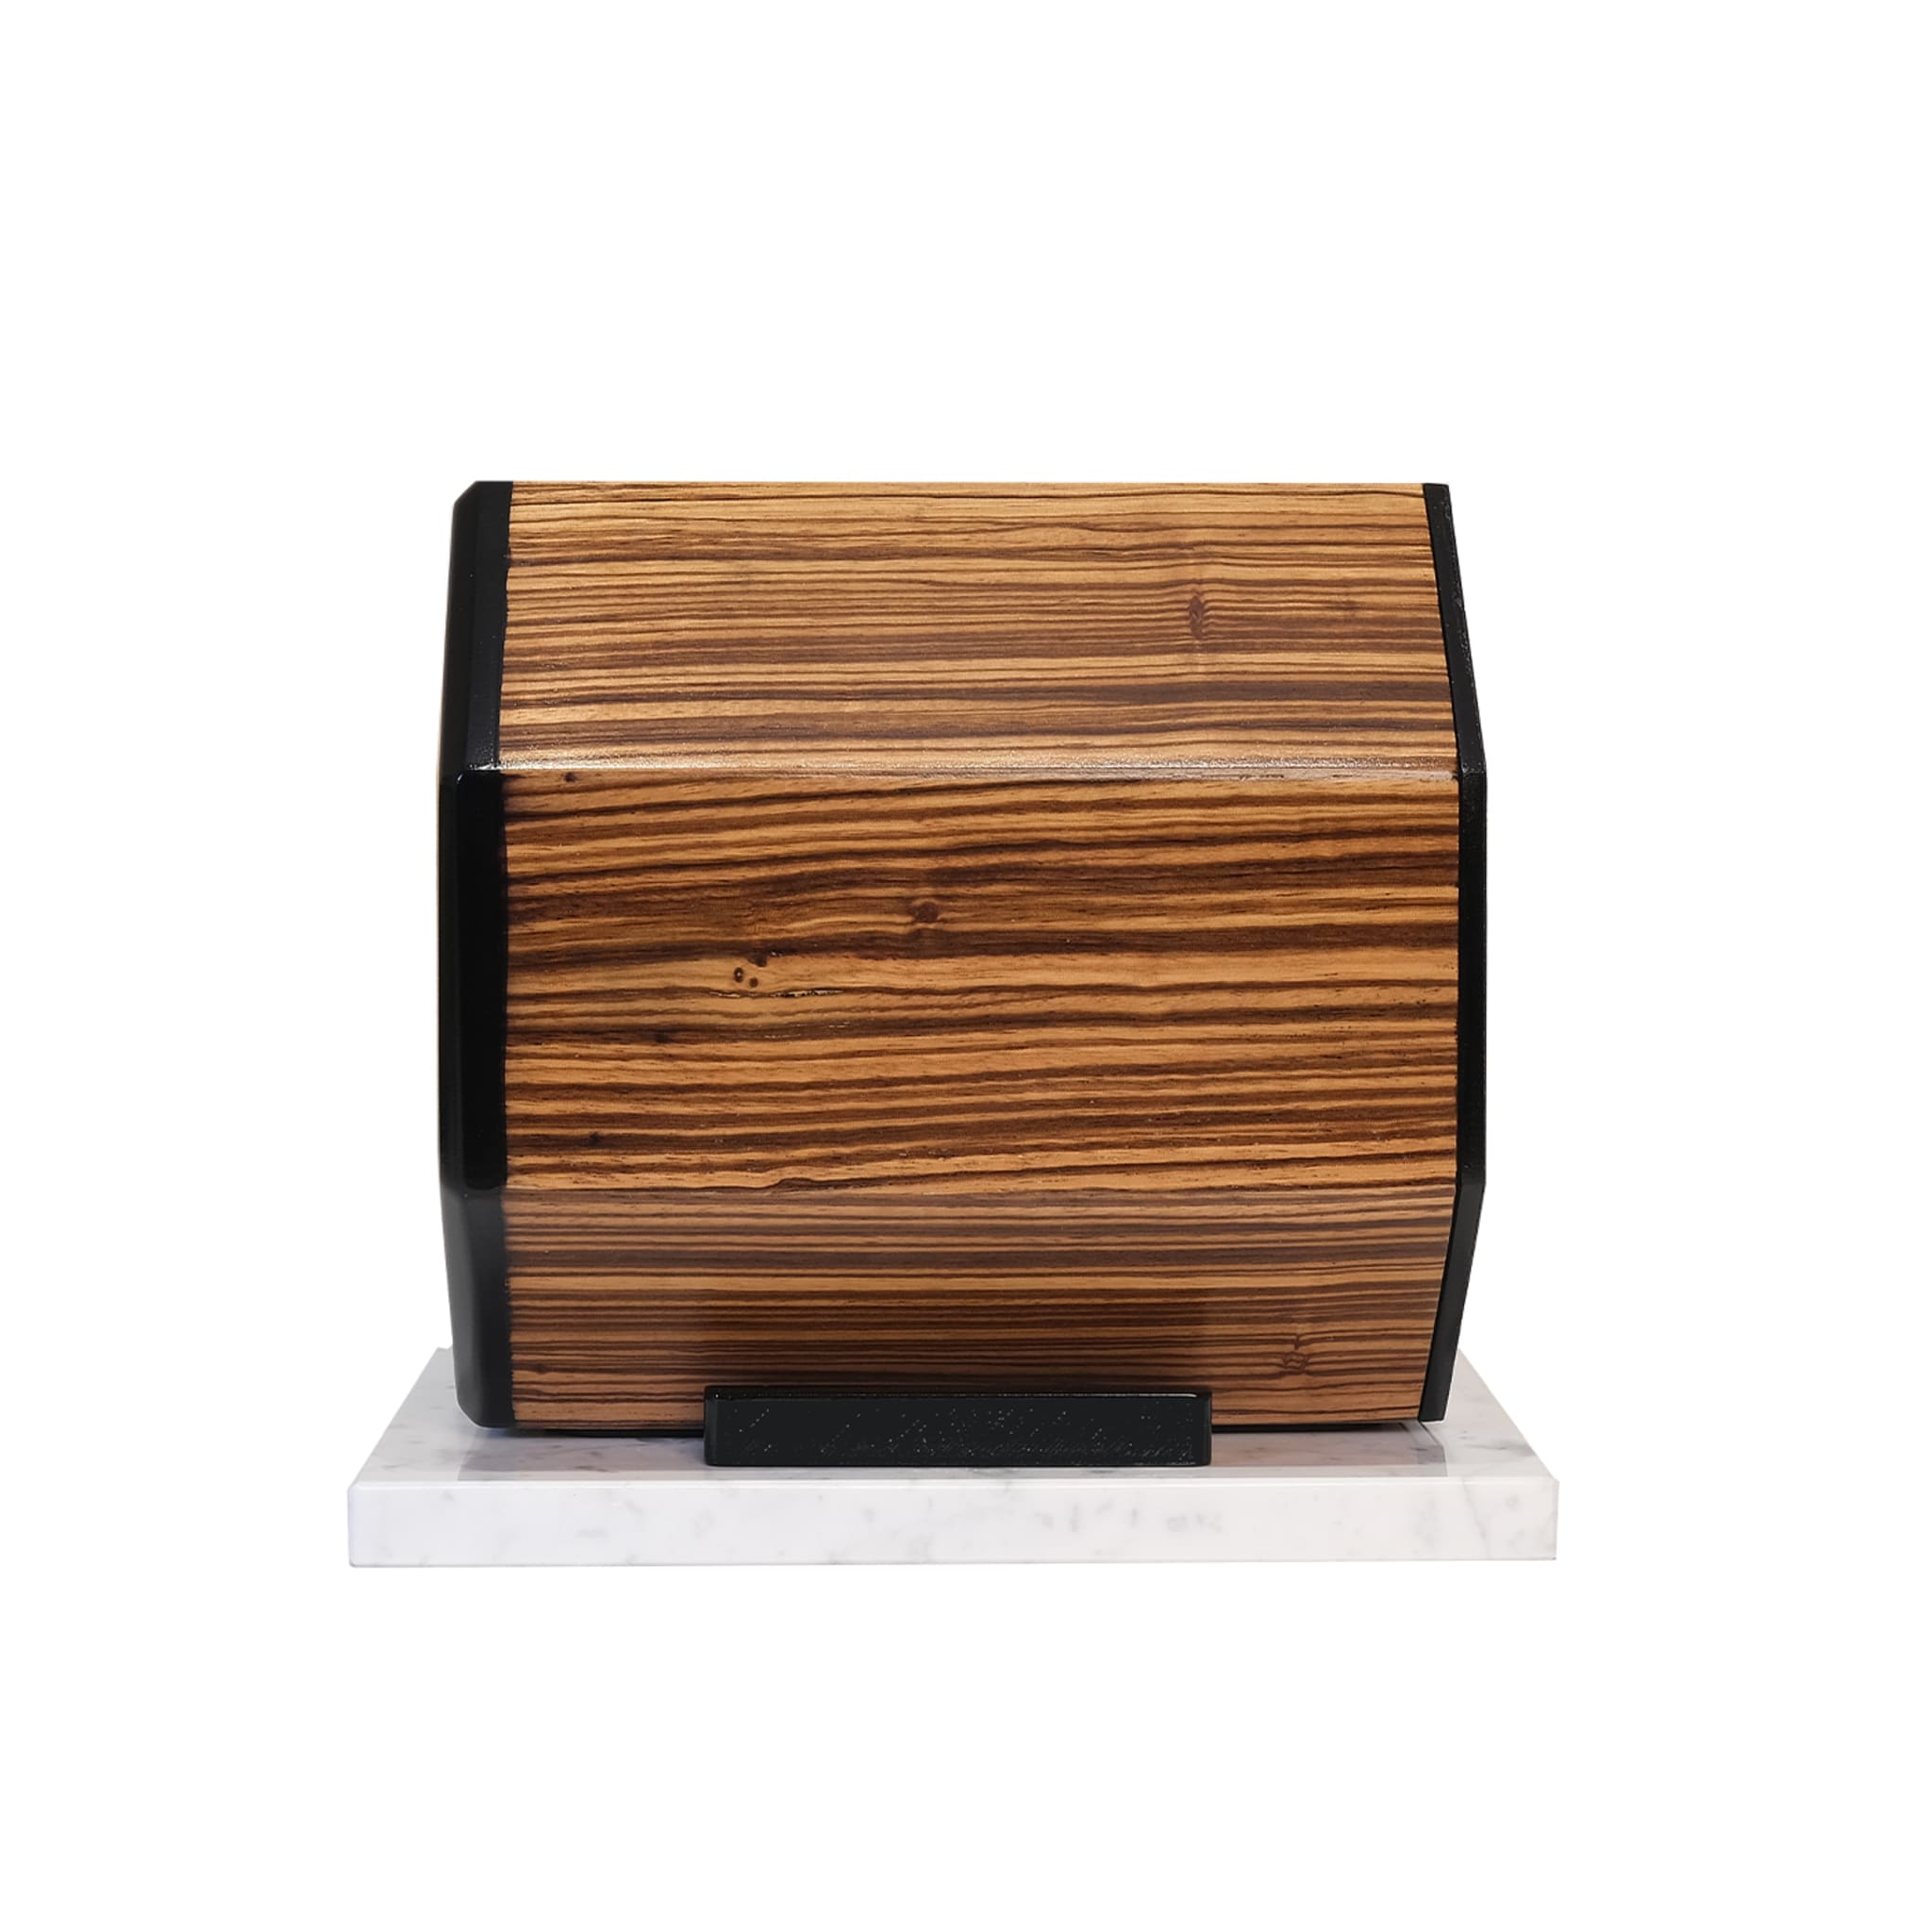 MT Octagon Triple Watch Winder Zebrano Wood & Cream Leather #1 - Alternative view 1